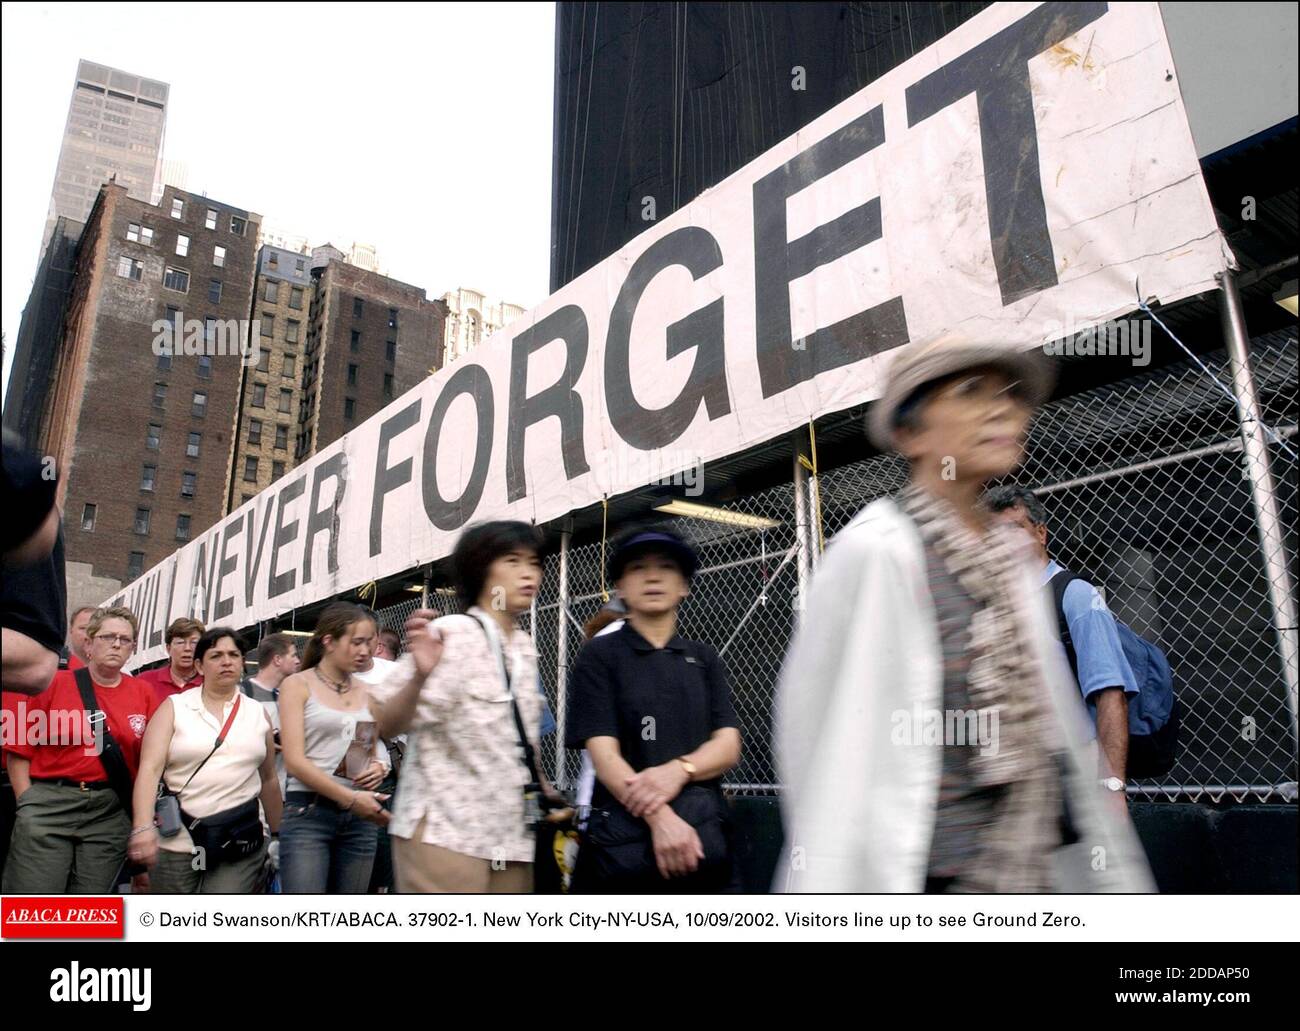 NO FILM, NO VIDEO, NO TV, NO DOCUMENTARY - © David Swanson/KRT/ABACA. 37902-1. New York City-NY-USA, 10/09/2002. Visitors line up to see Ground Zero. Stock Photo